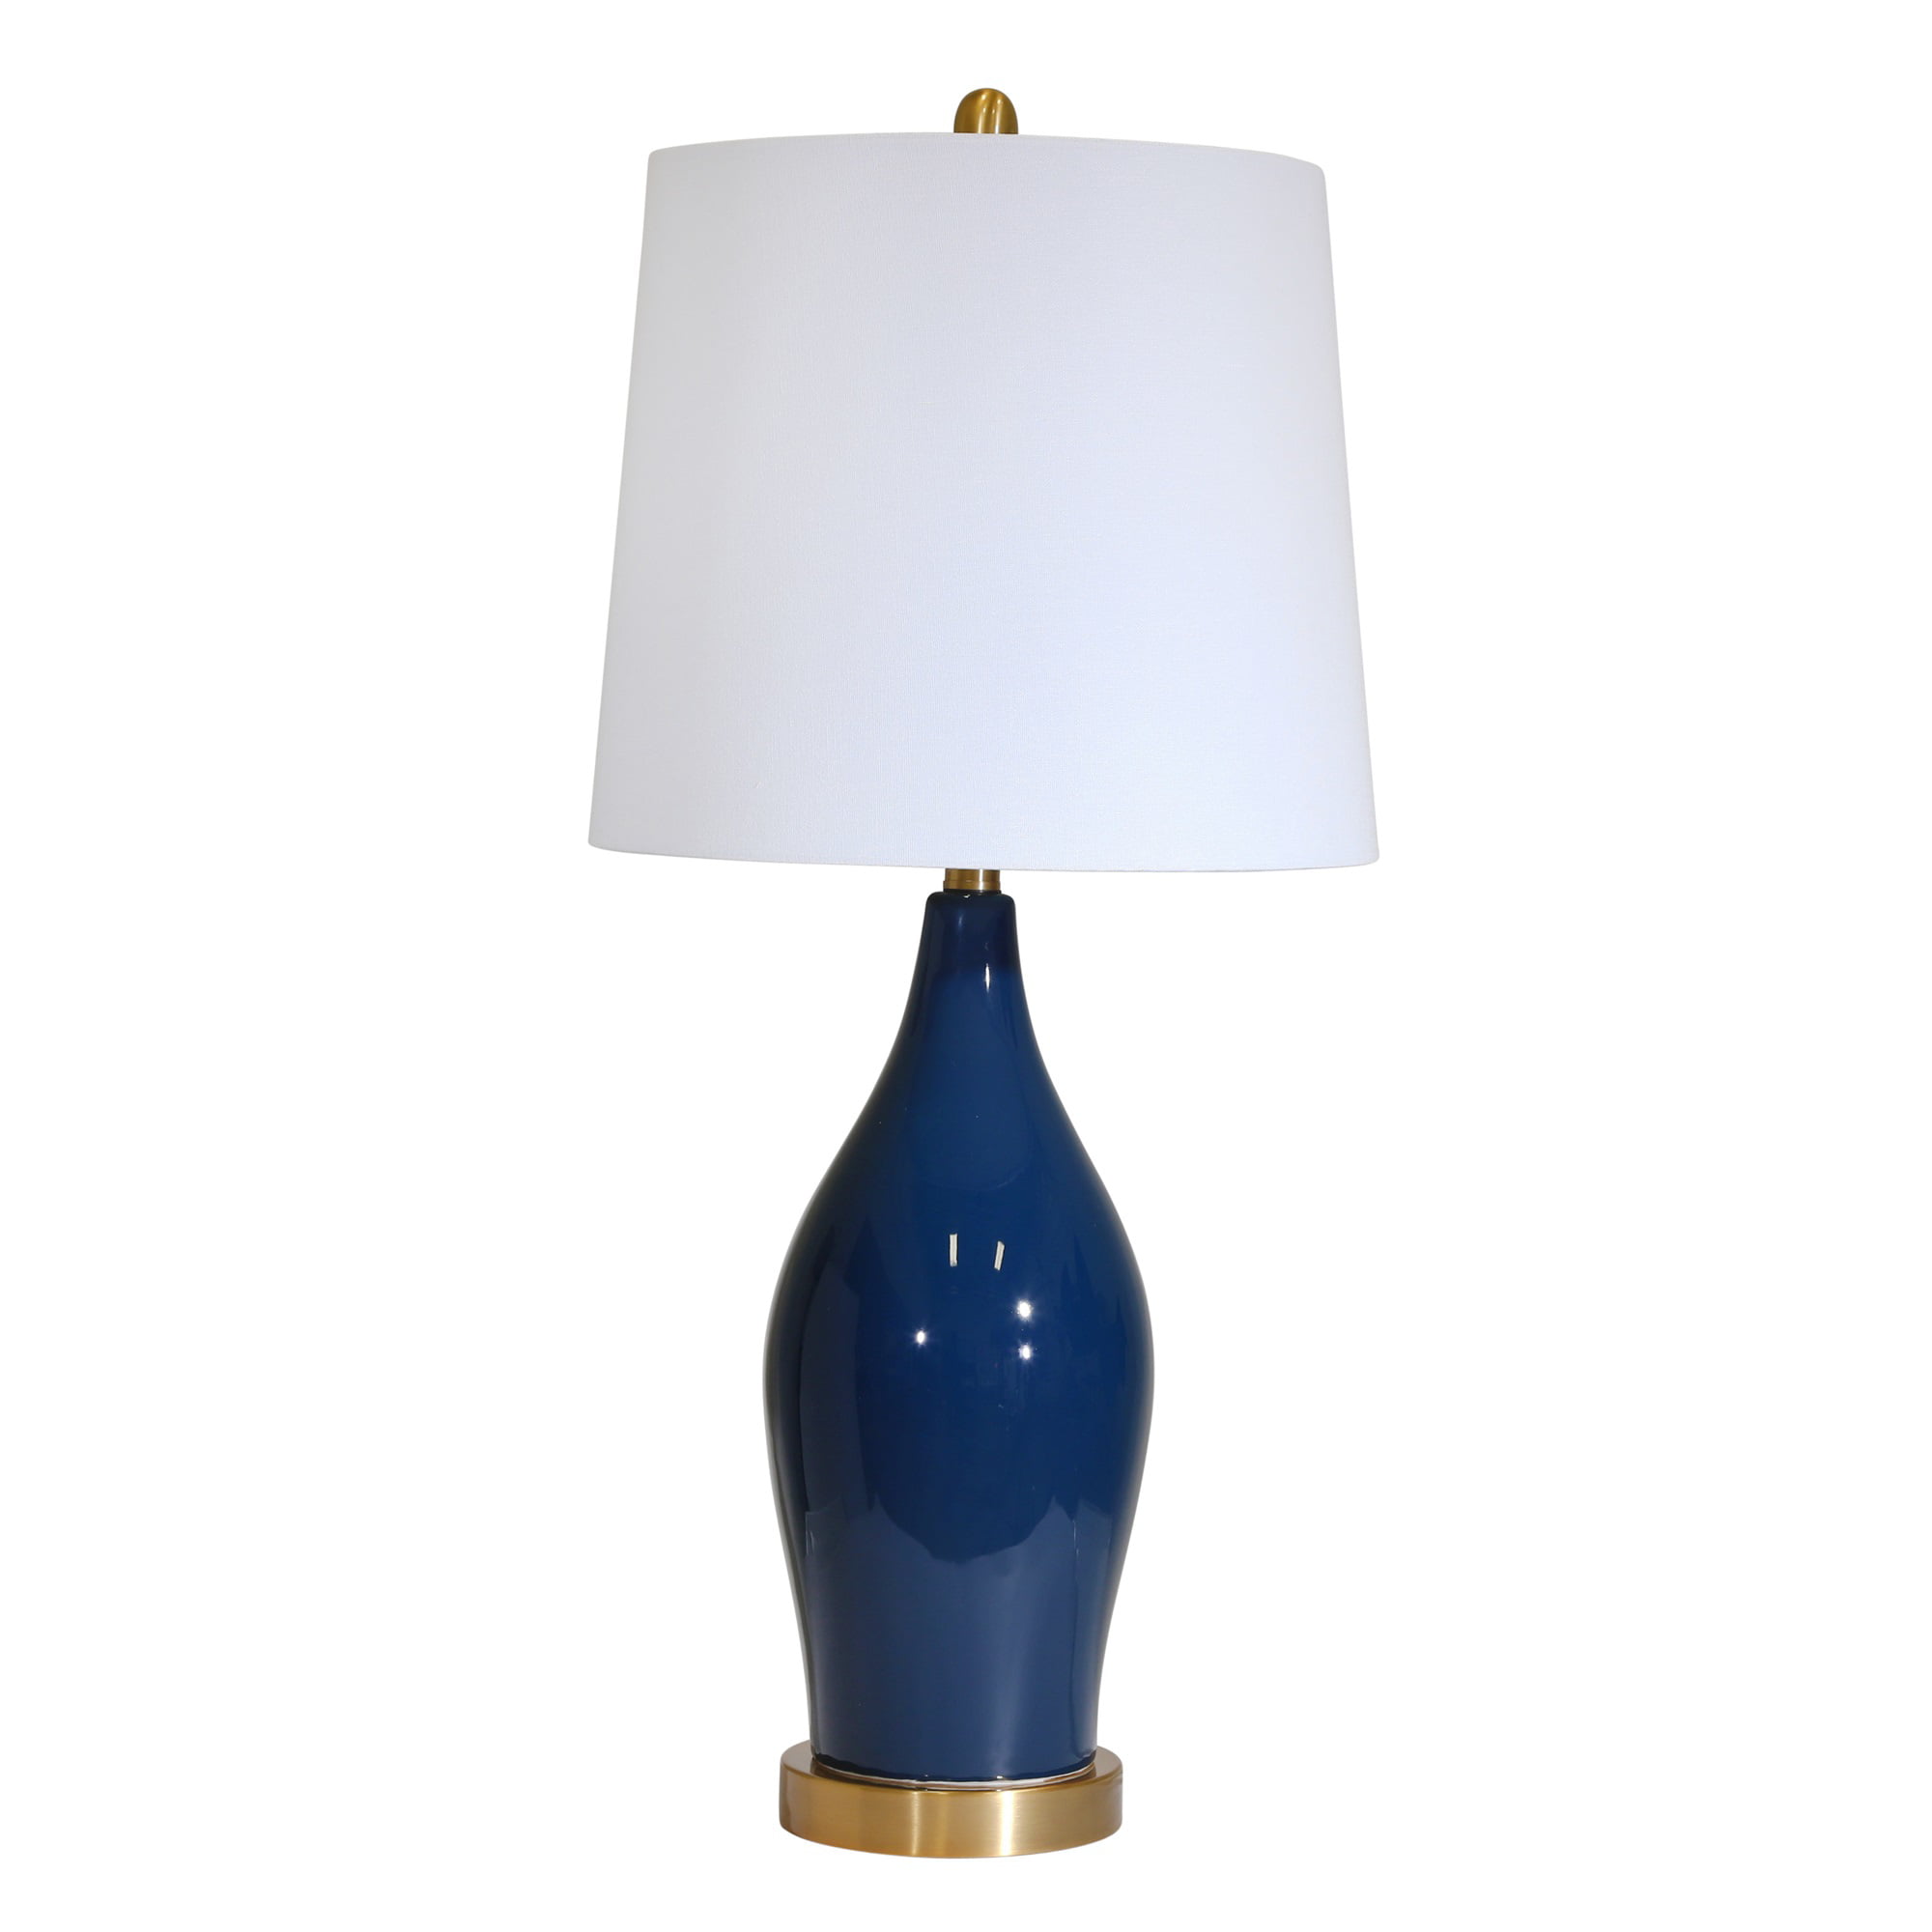 Ceramic 31 Table Lamp W Usb Indigo, Indigo Blue Glass Table Lamp